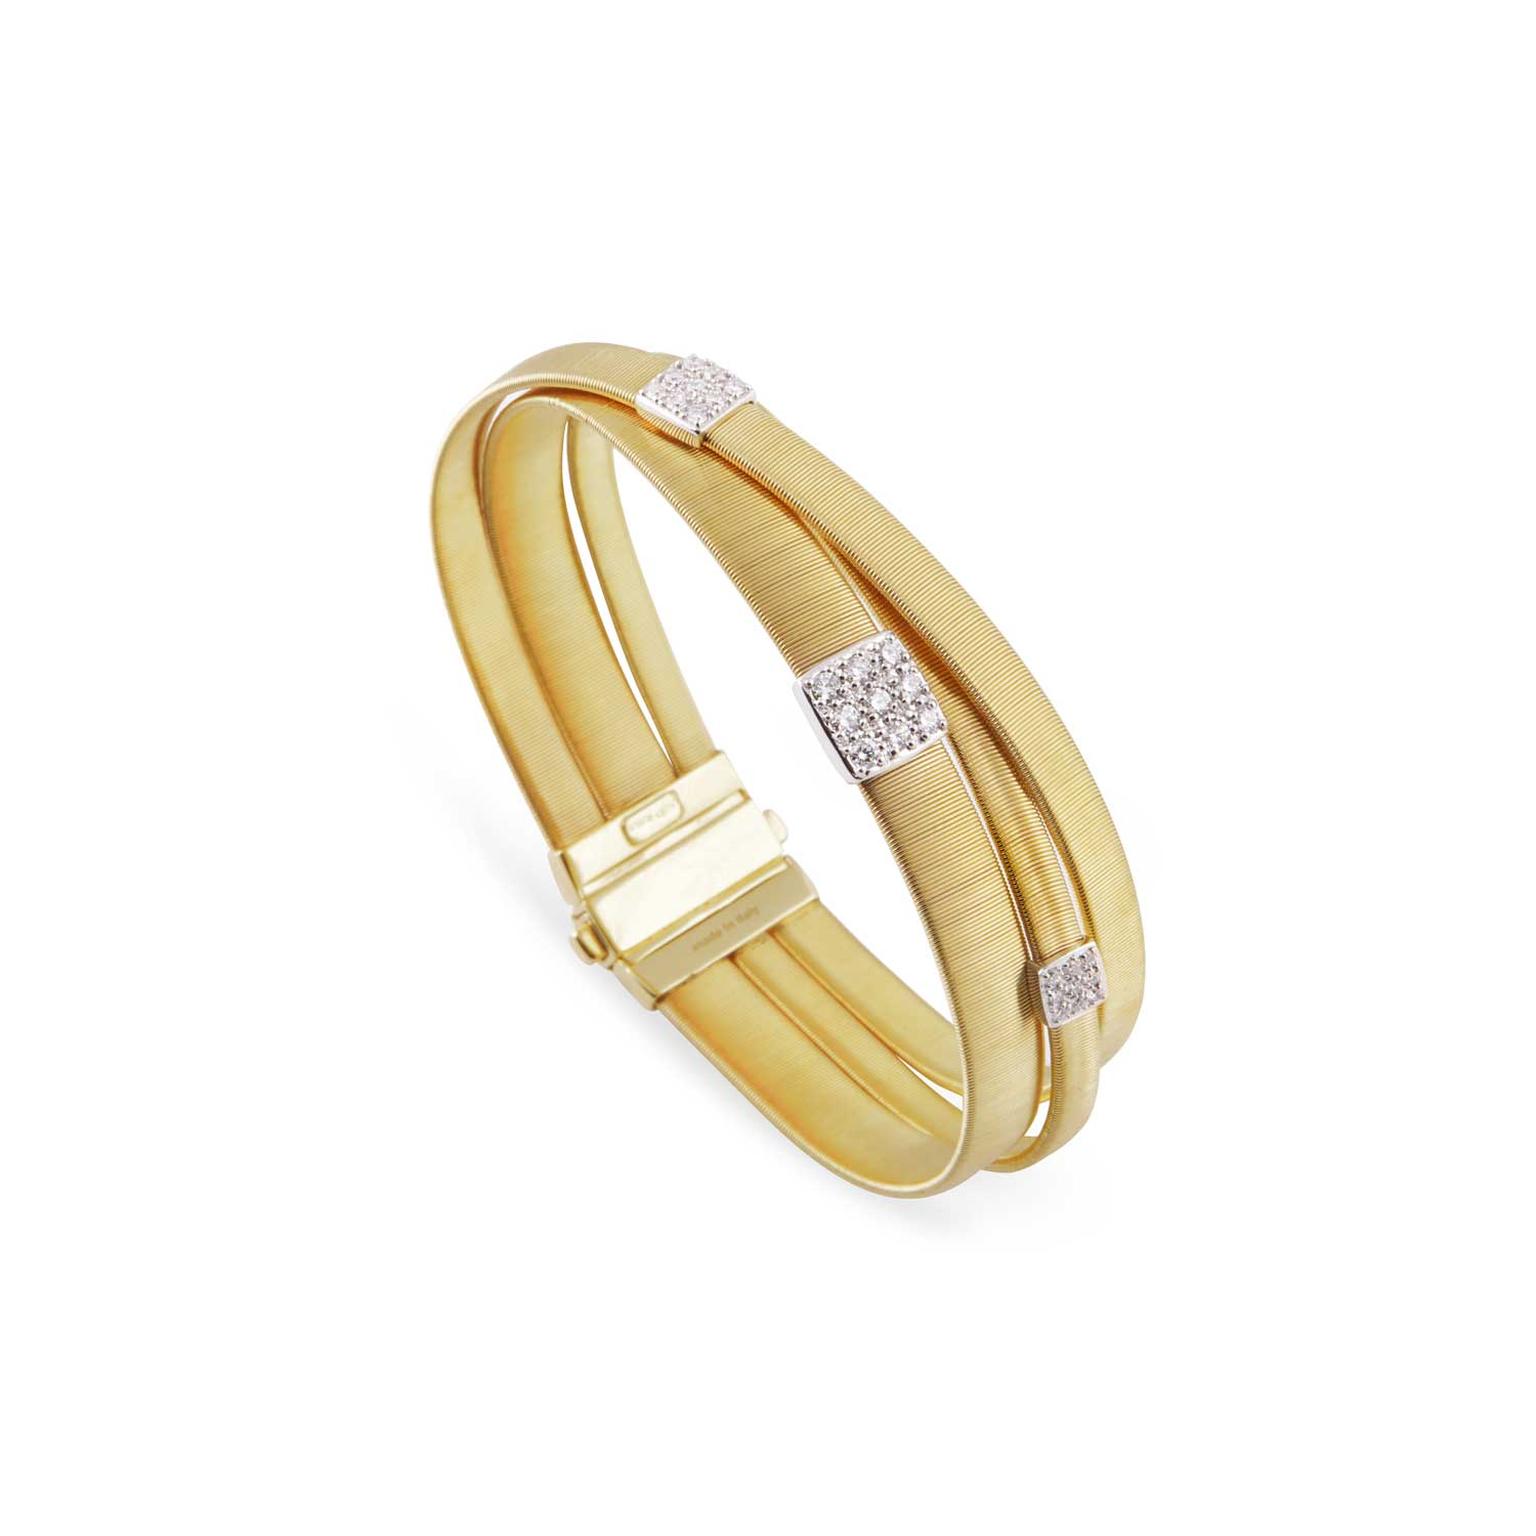 Marco Bicego yellow gold three-strand Masai bracelet with diamonds